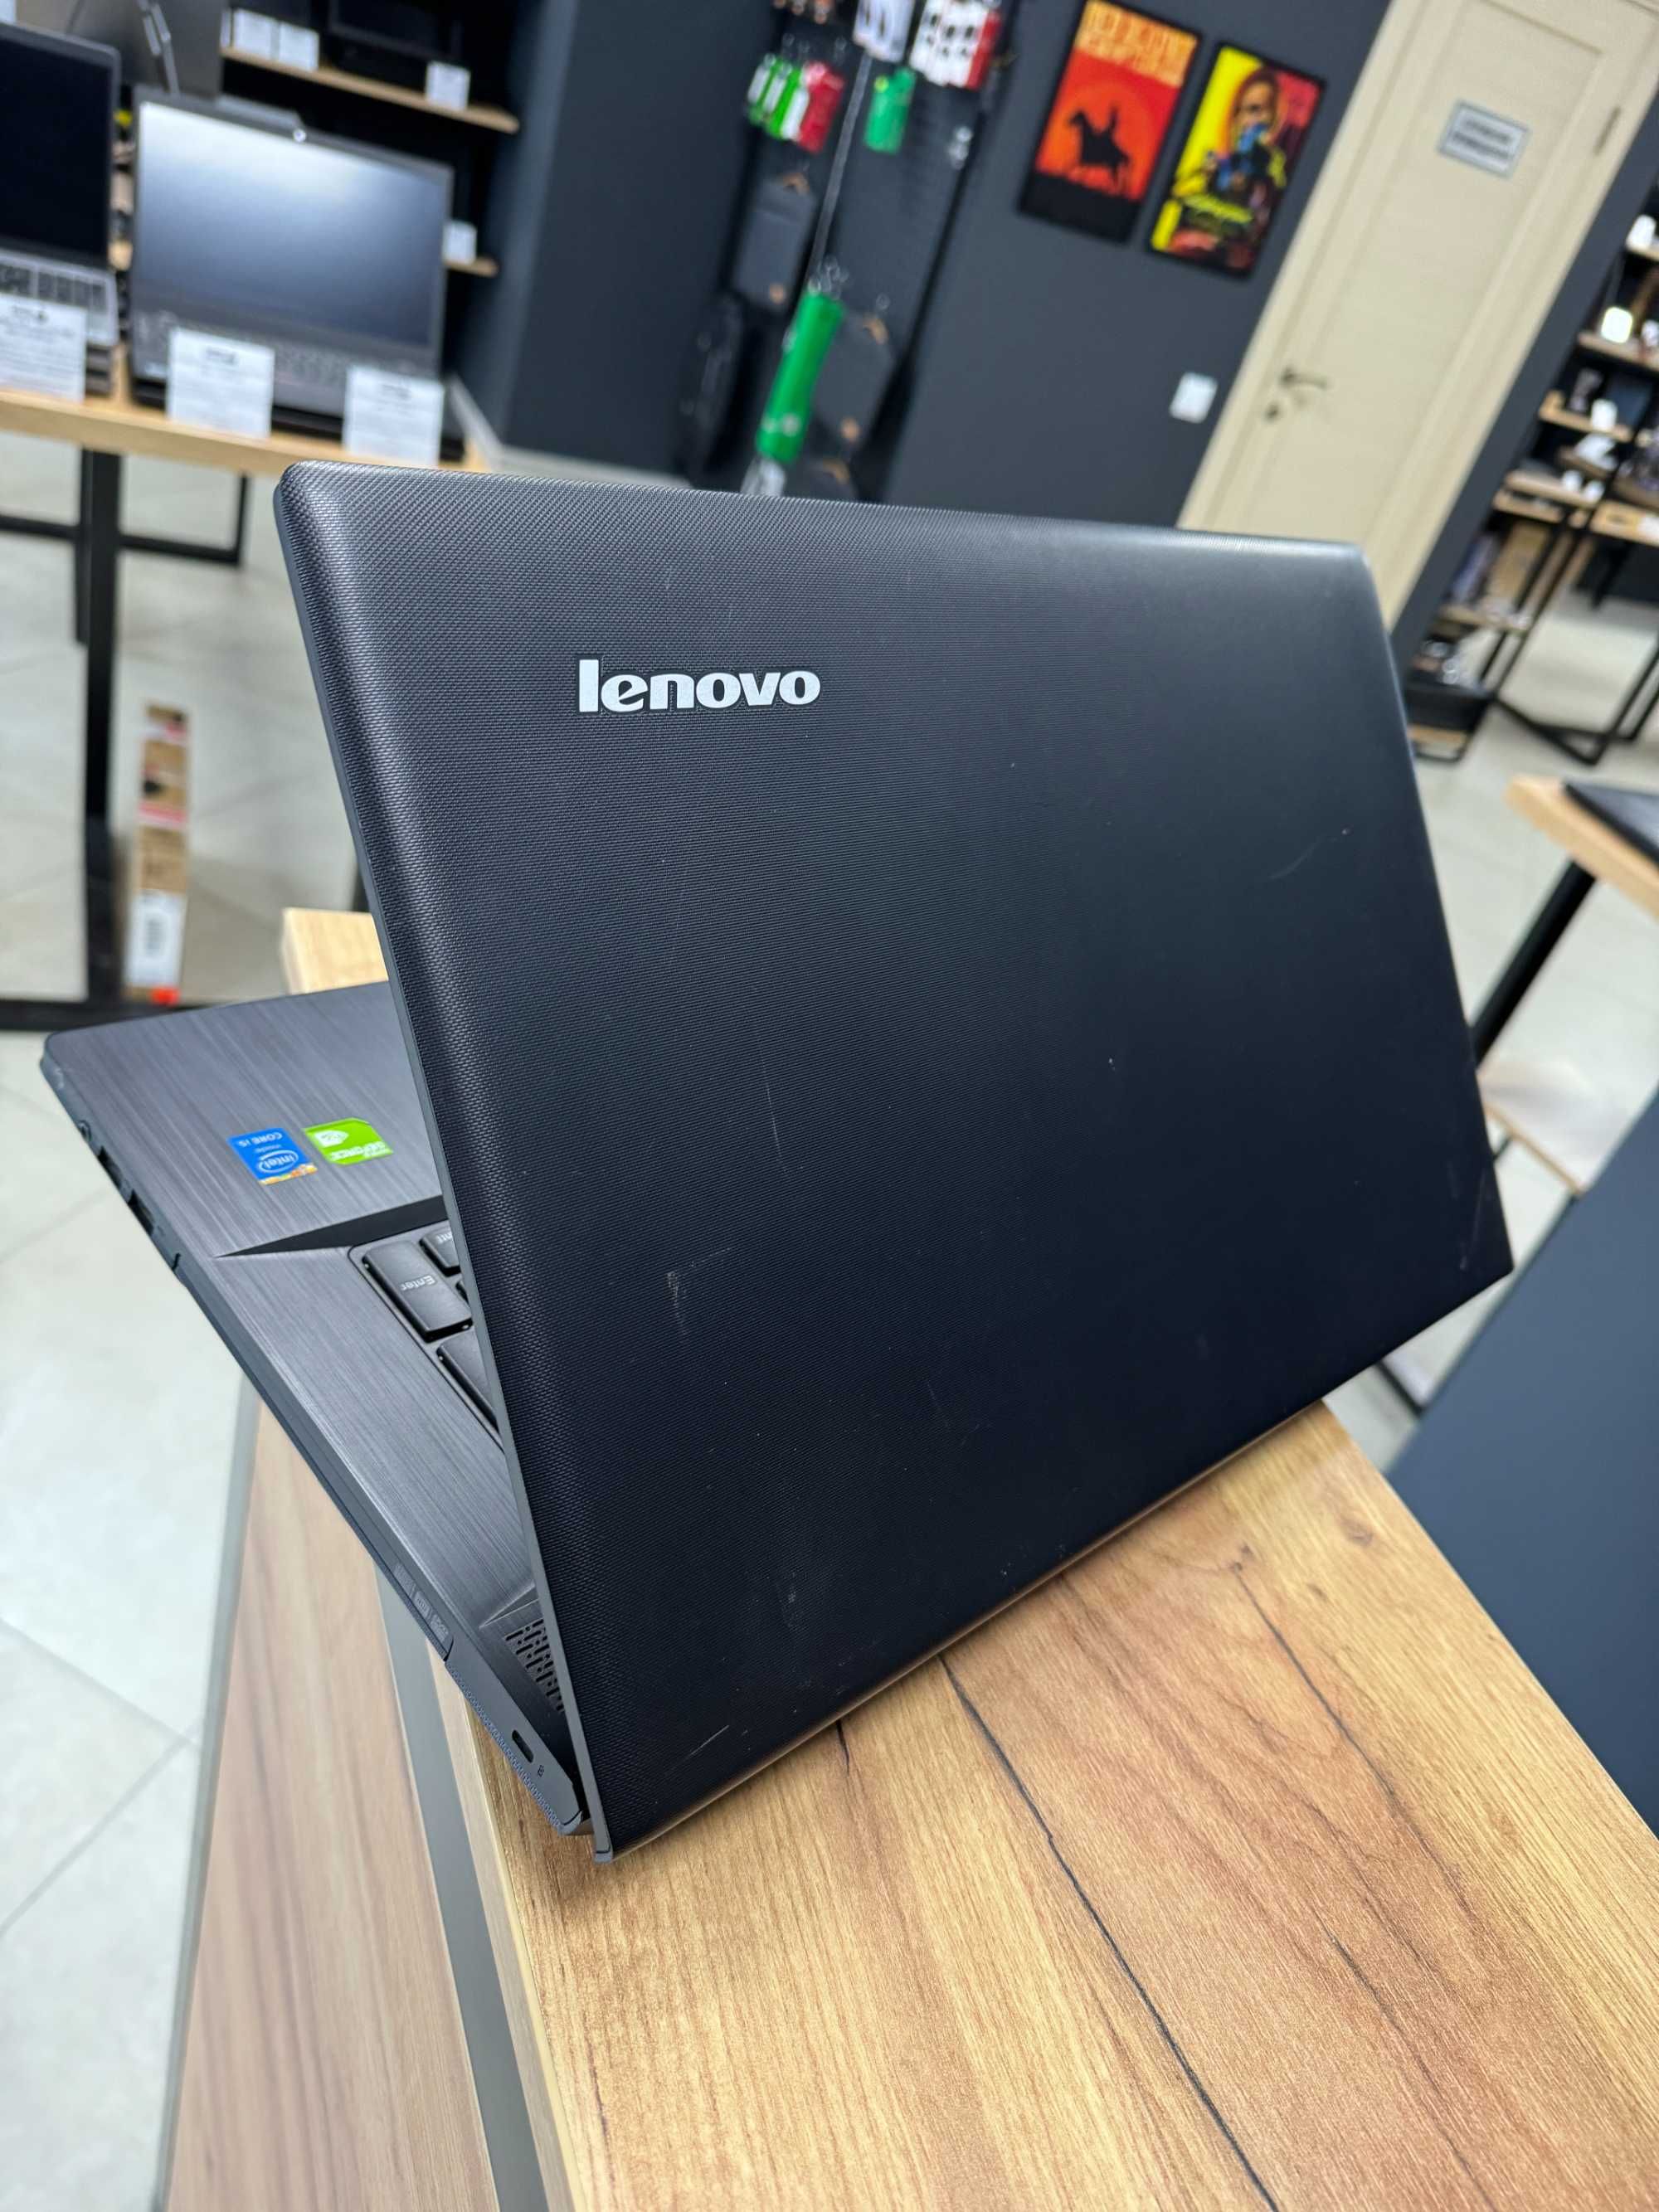 Ігровий Lenovo G710 - 17.3/i5 4210M/NVIDIA 820M/8 GB/120 SSD + 500 HDD